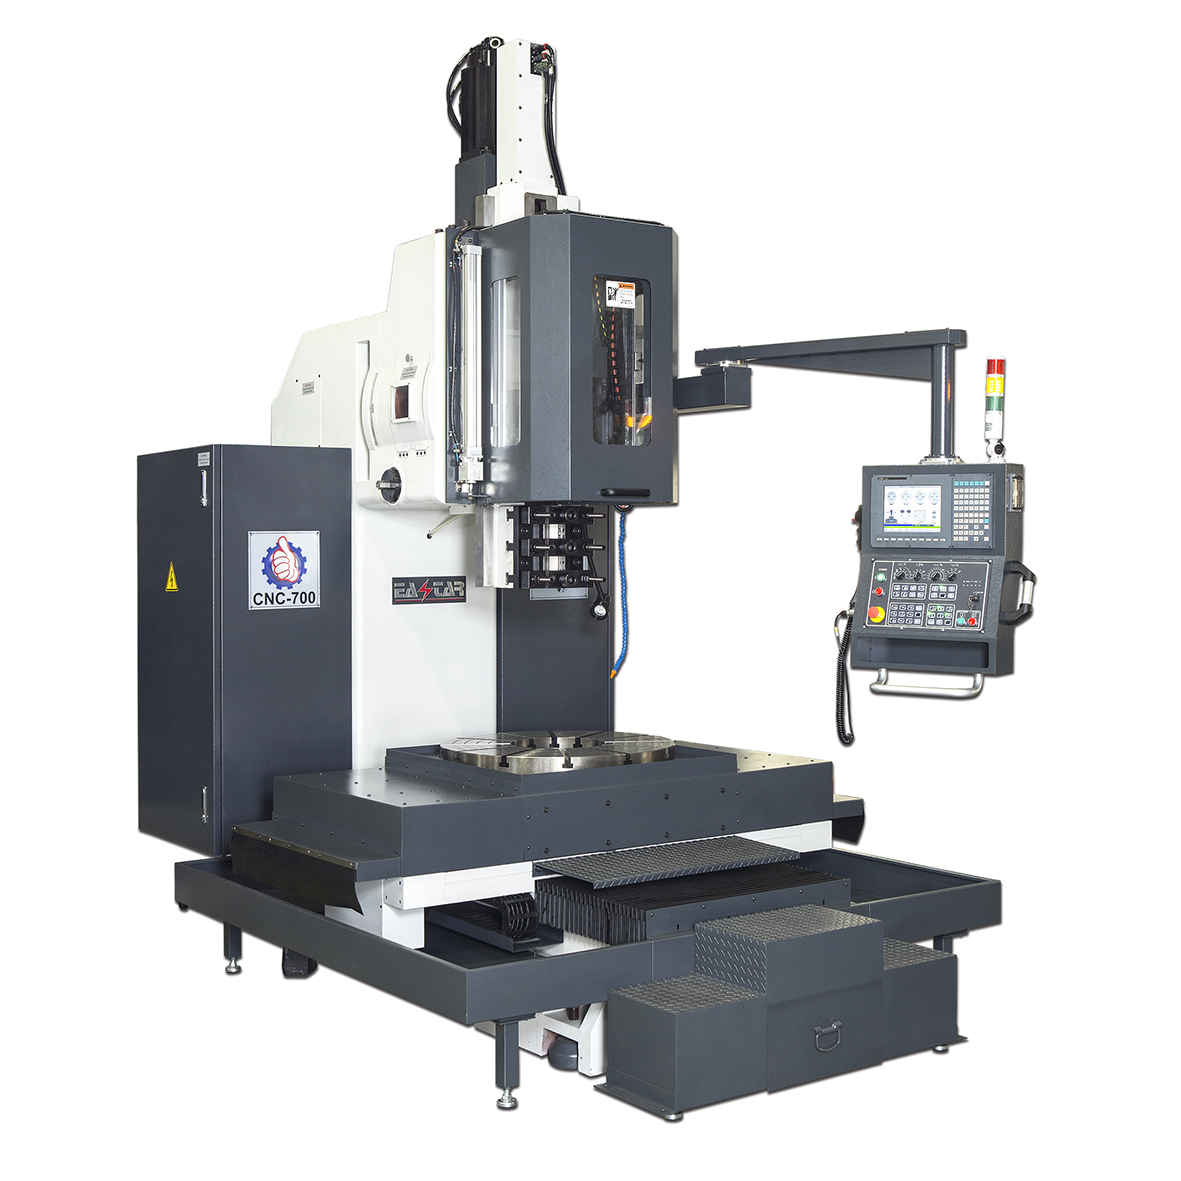 4 Axis CNC Slotter Machine-CNC-700